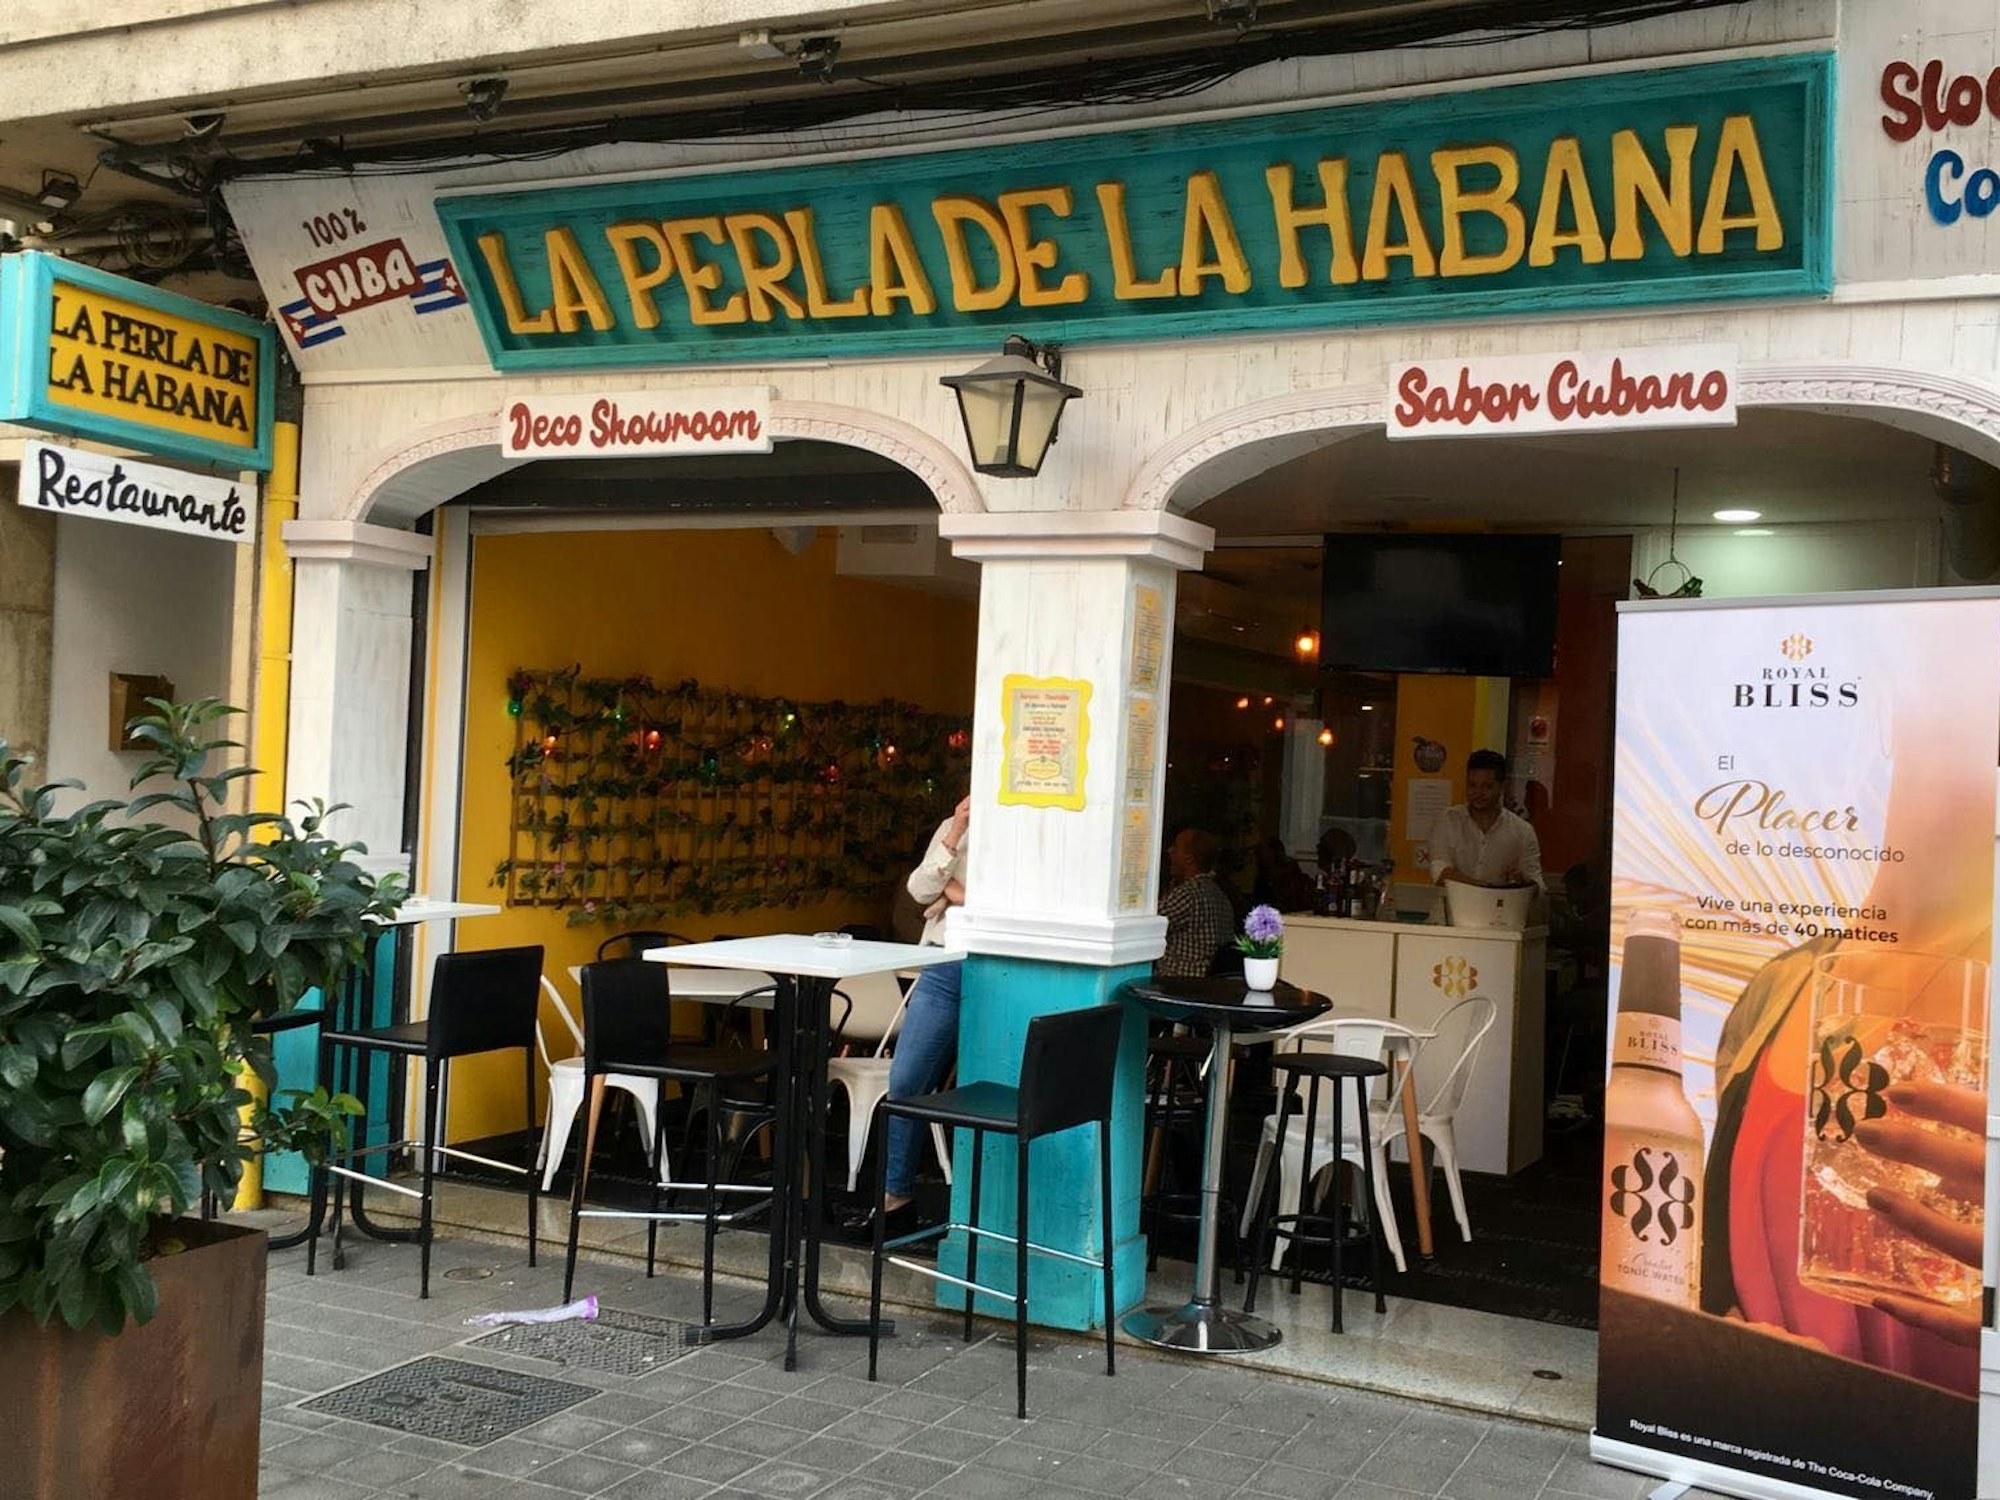 Das Restaurant „La Perla de La Habana“ muss auf Mallorca schließen.